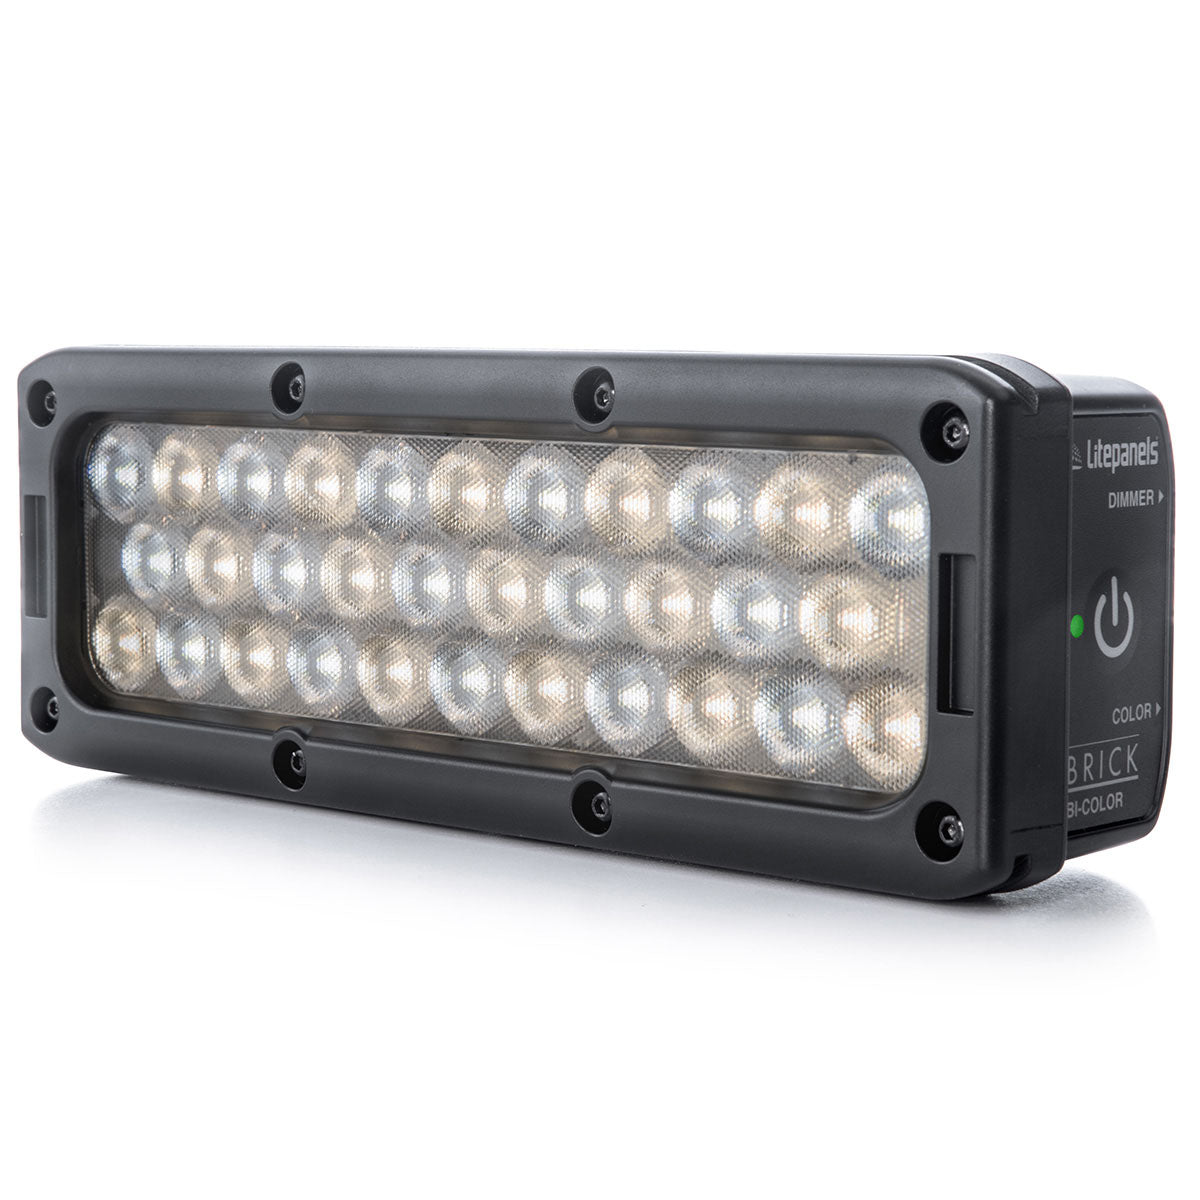 Litepanels(ライトパネルズ) LEDライト Brick バイカラー (915-1003)